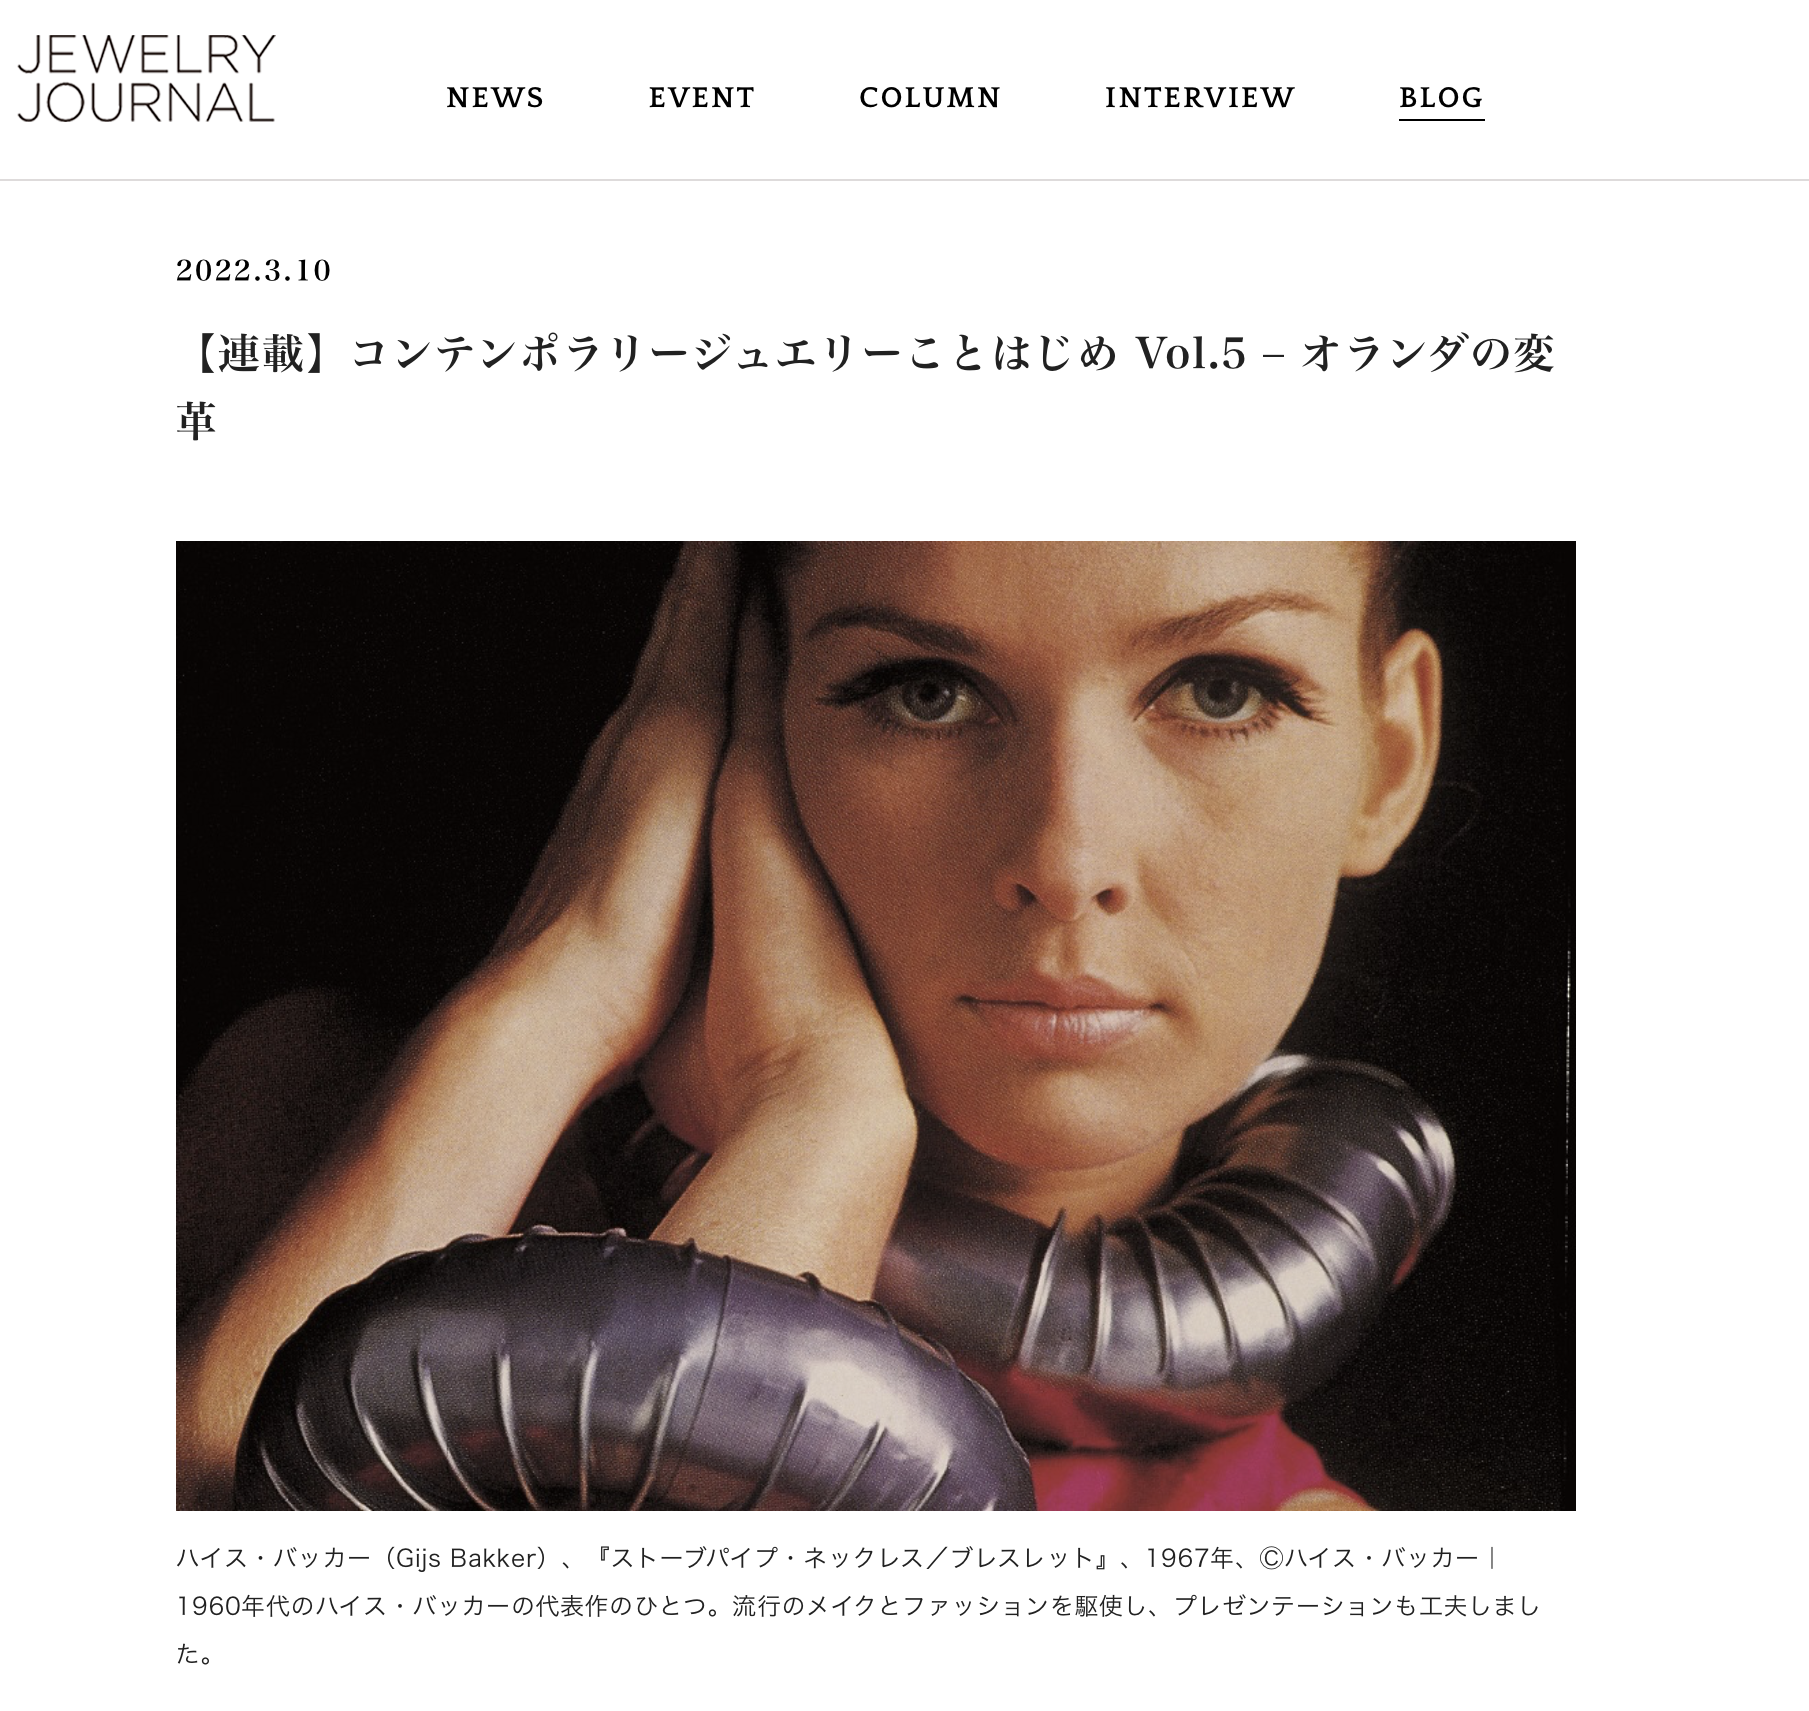 Jewelry Journal - Japanese blog about Dutch Jewelry